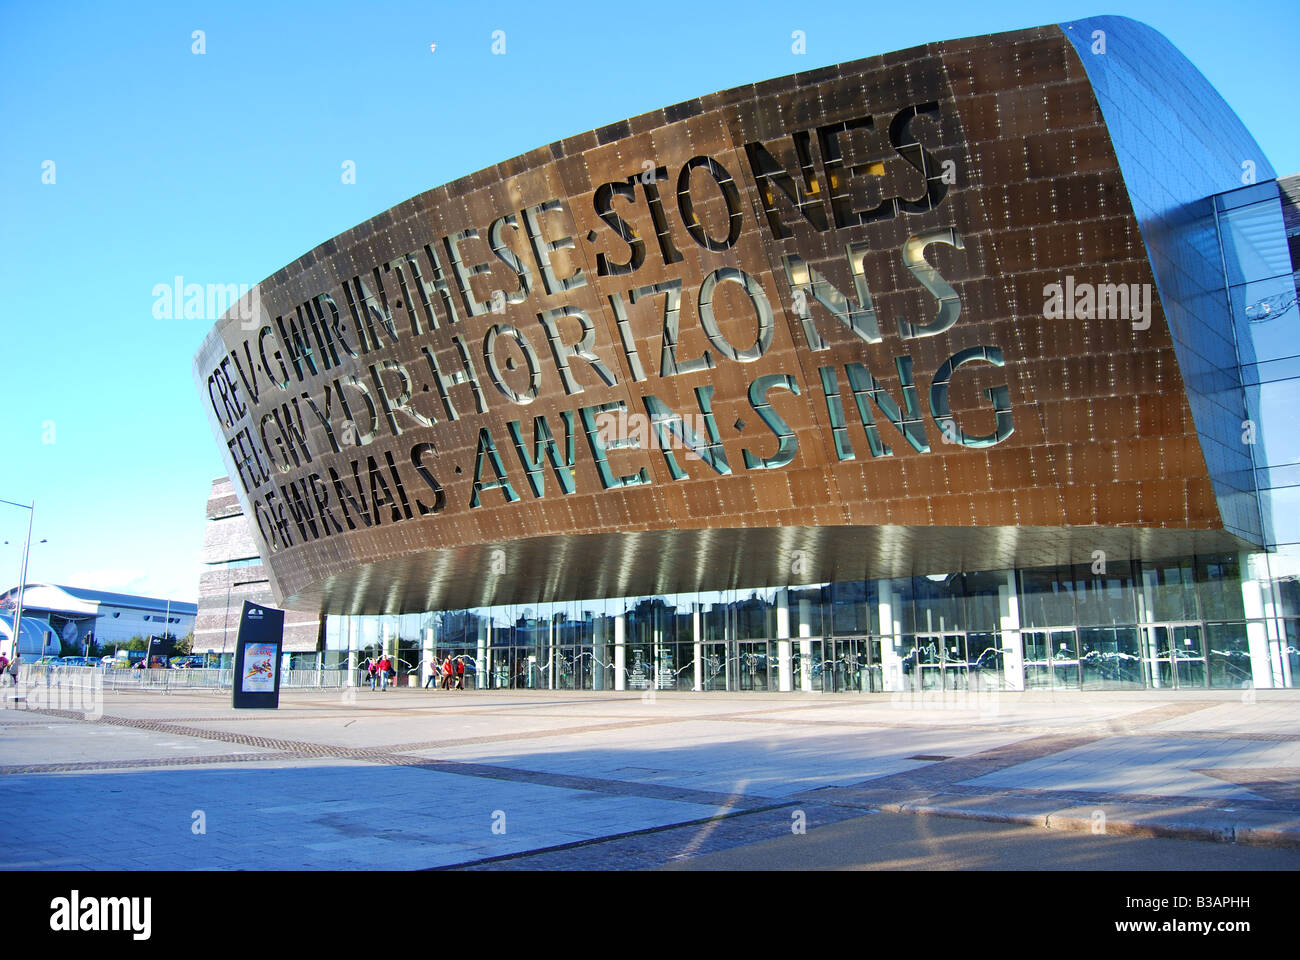 Wales Millennium Centre, Cardiff Bay, Cardiff, South Glamorgan, Wales, United KIngdom Stock Photo